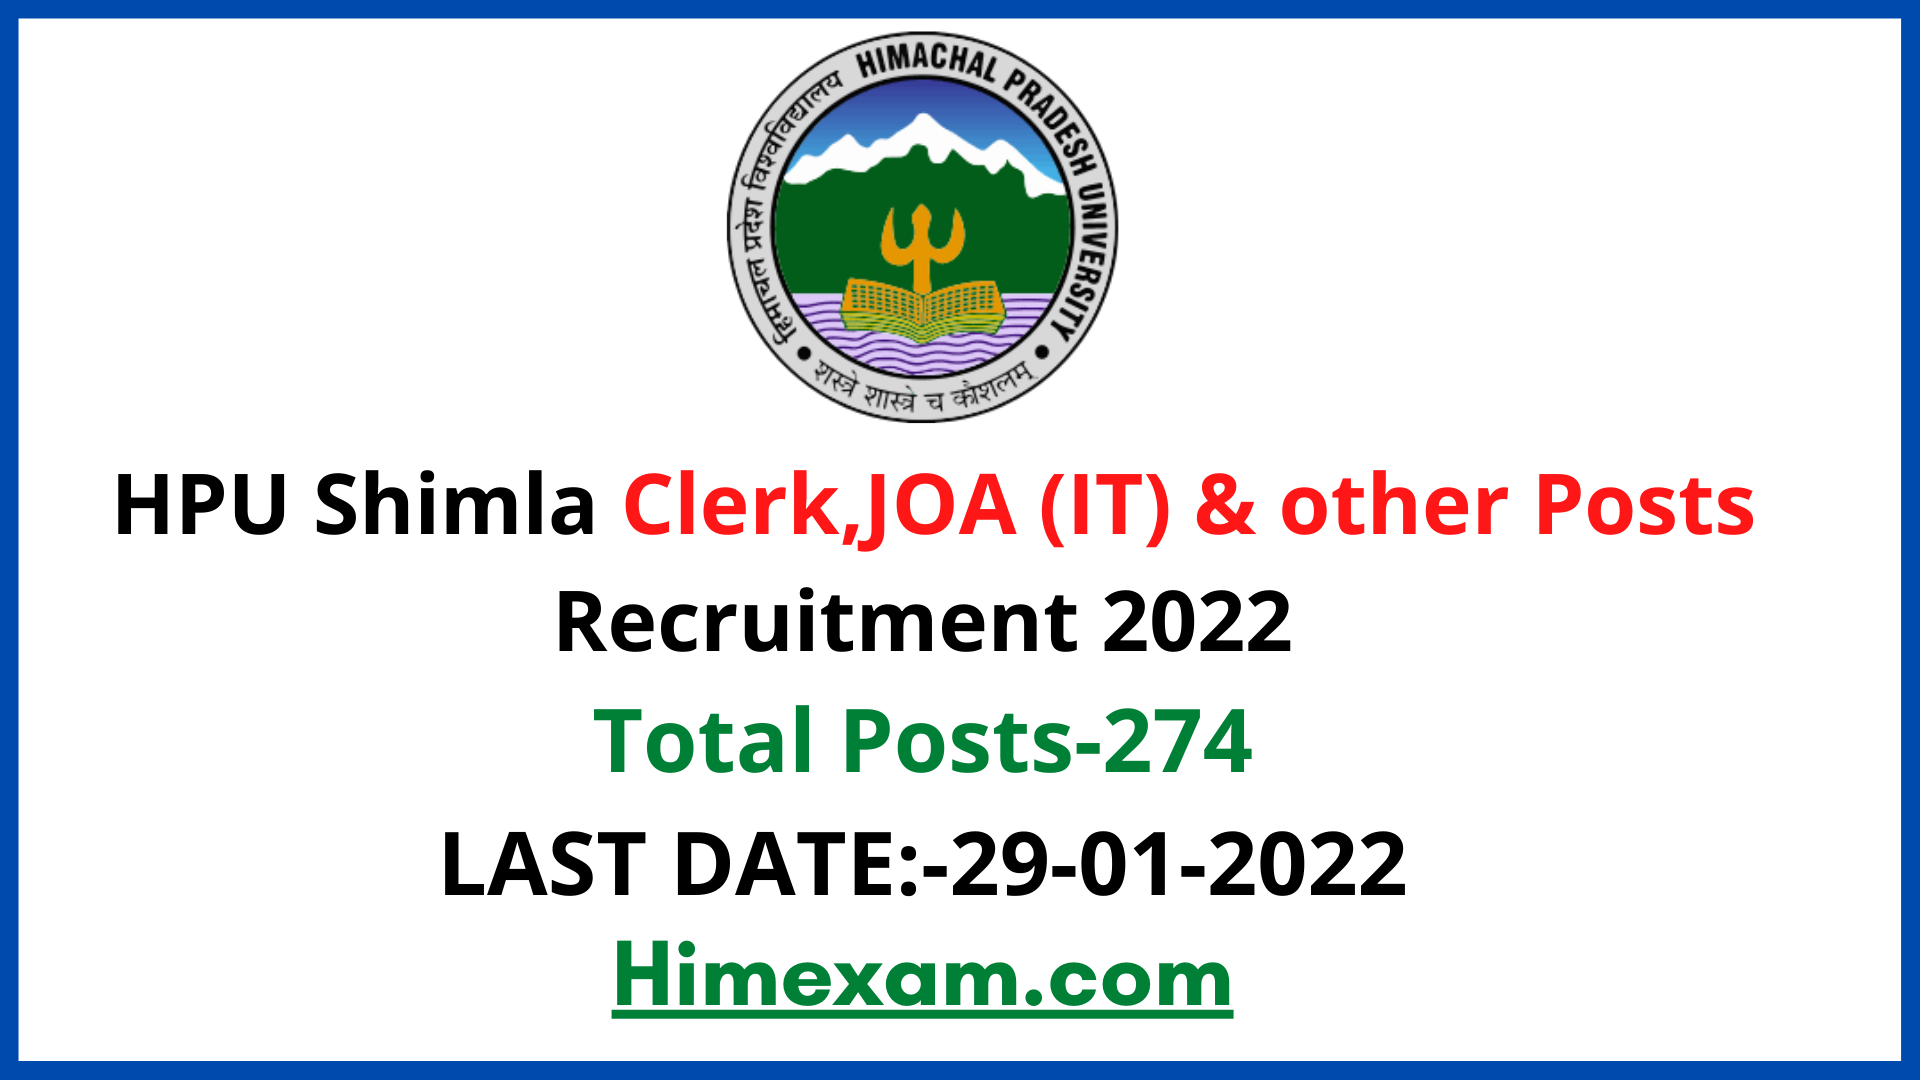 HPU Shimla Clerk,JOA (IT) & other Posts Recruitment 2022